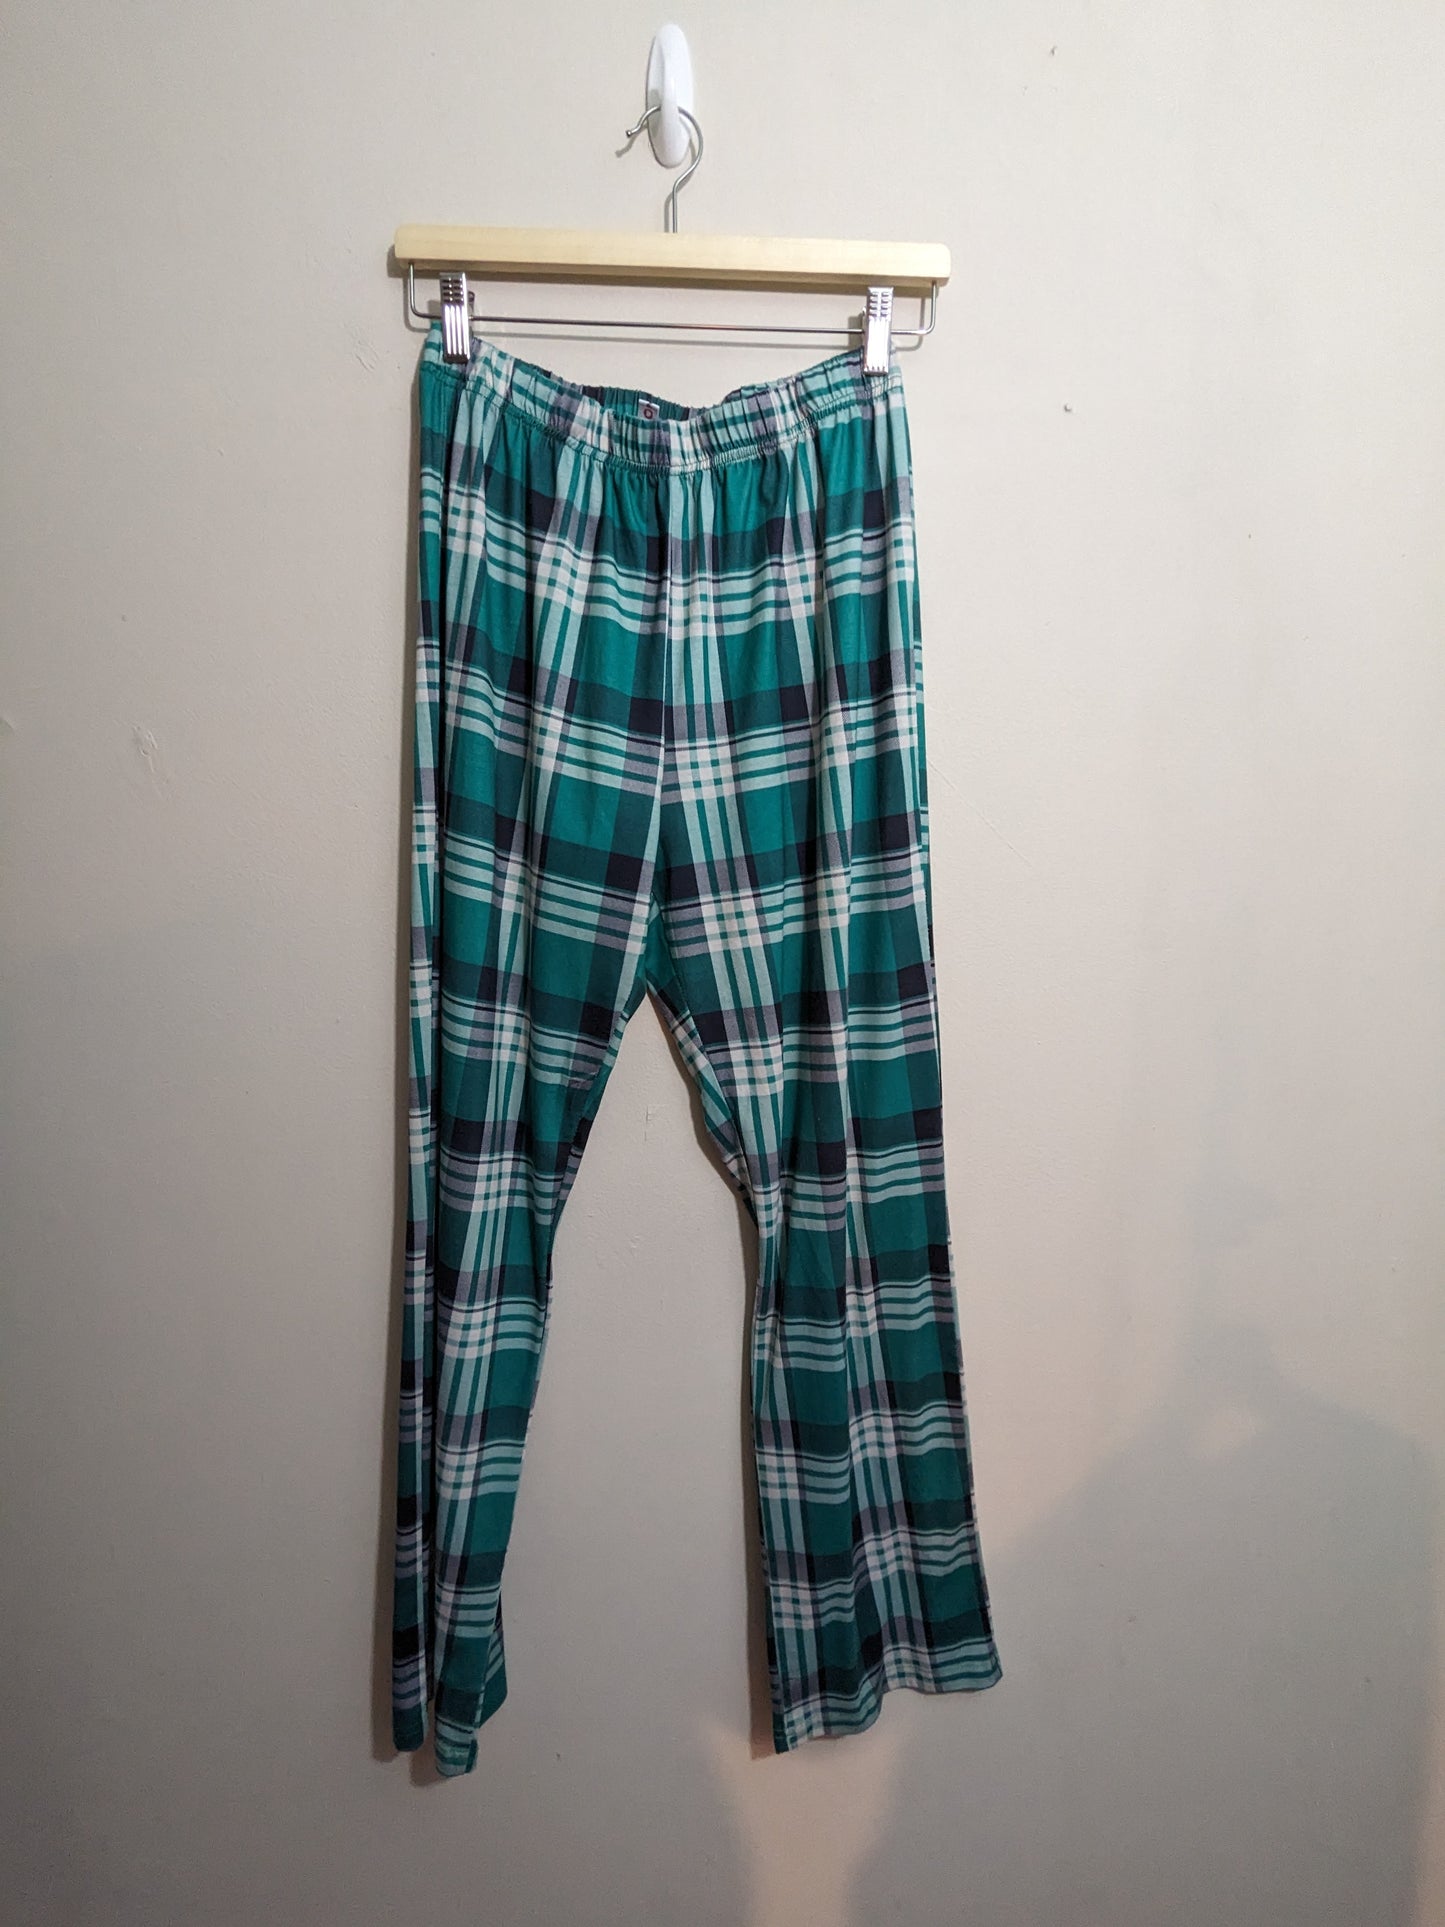 Medium Upcycled Embroidered Pyjama Set - Bookish - Dictionary Definition: Librocubicularist